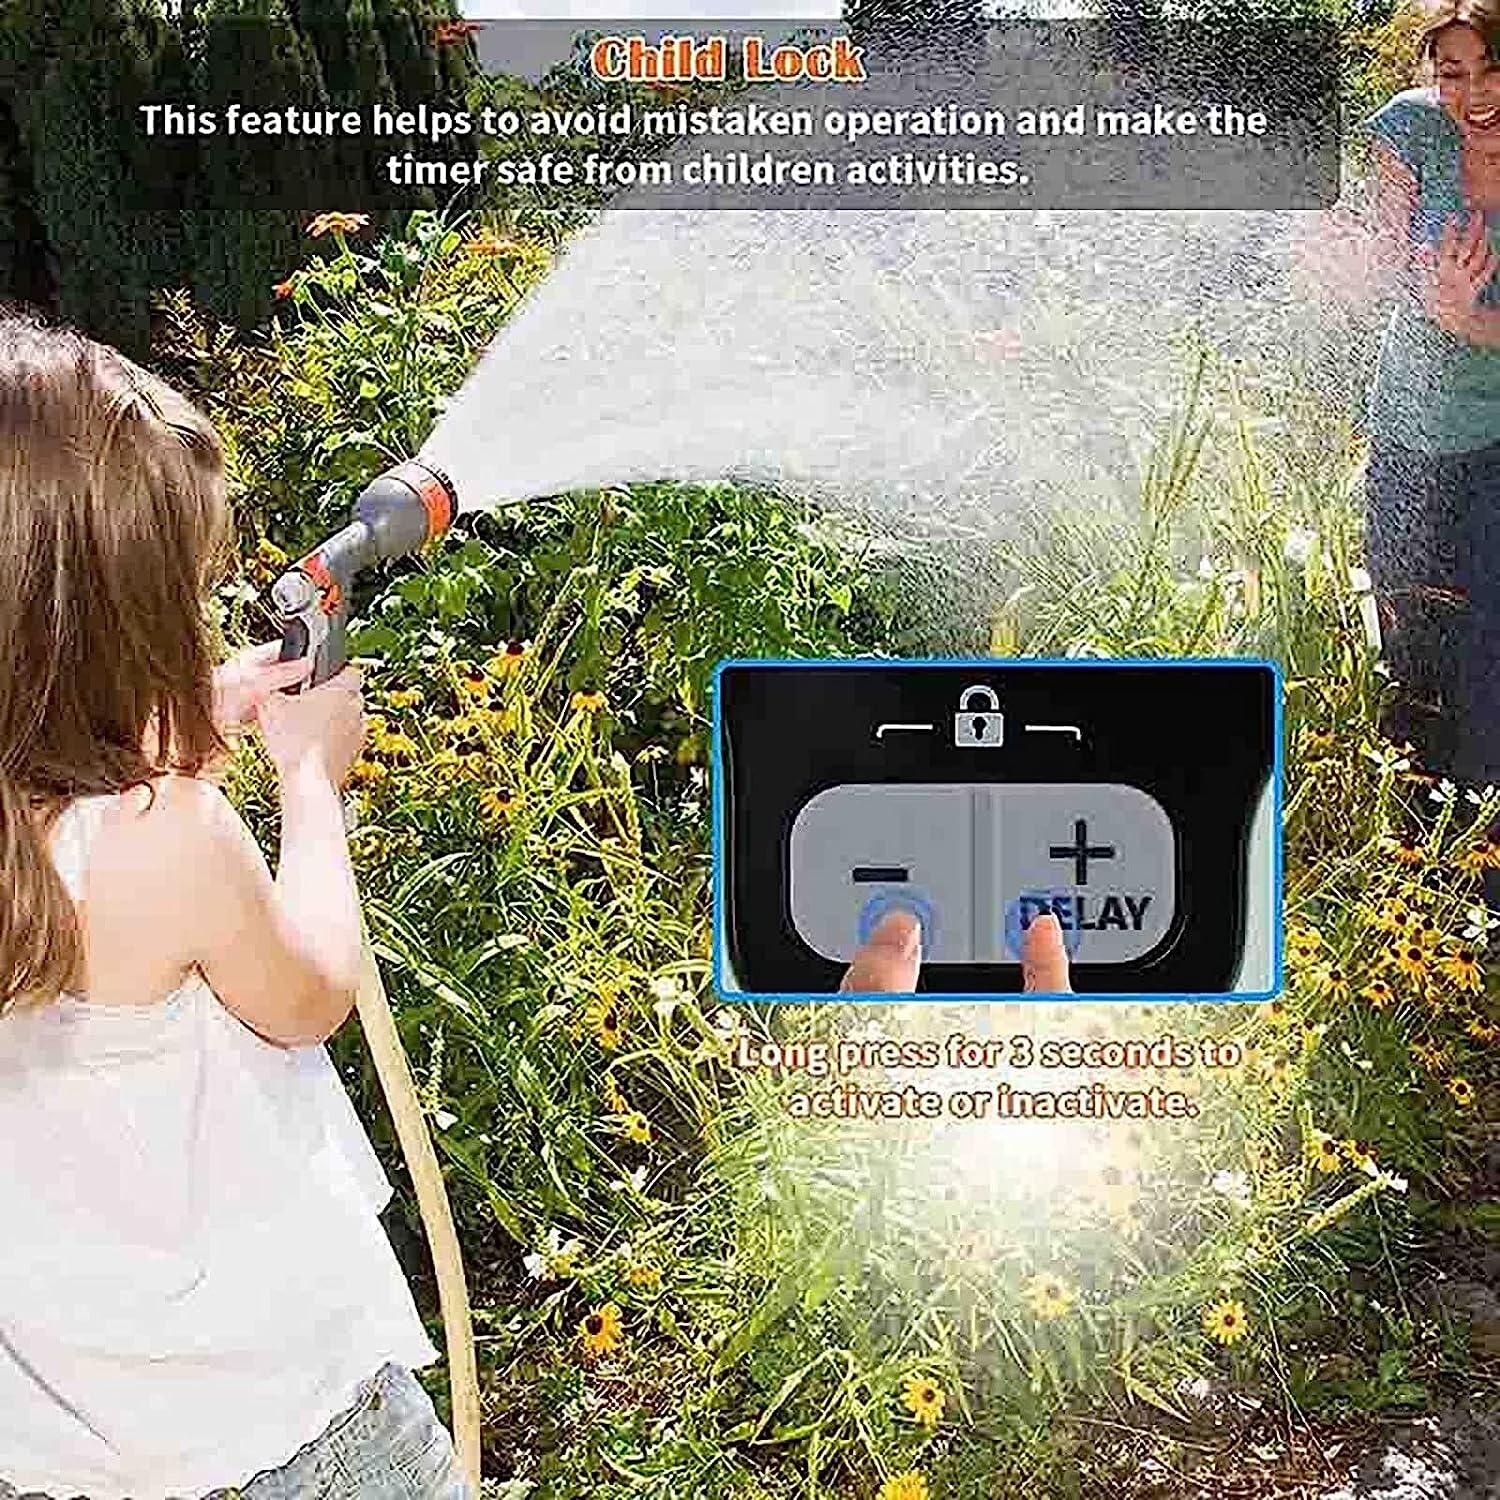 LazyHose™ Garden Irrigation System, Water Sprinkler Timer, Large Screen Display Garden Watering Timer Irrigation - Lazy Pro